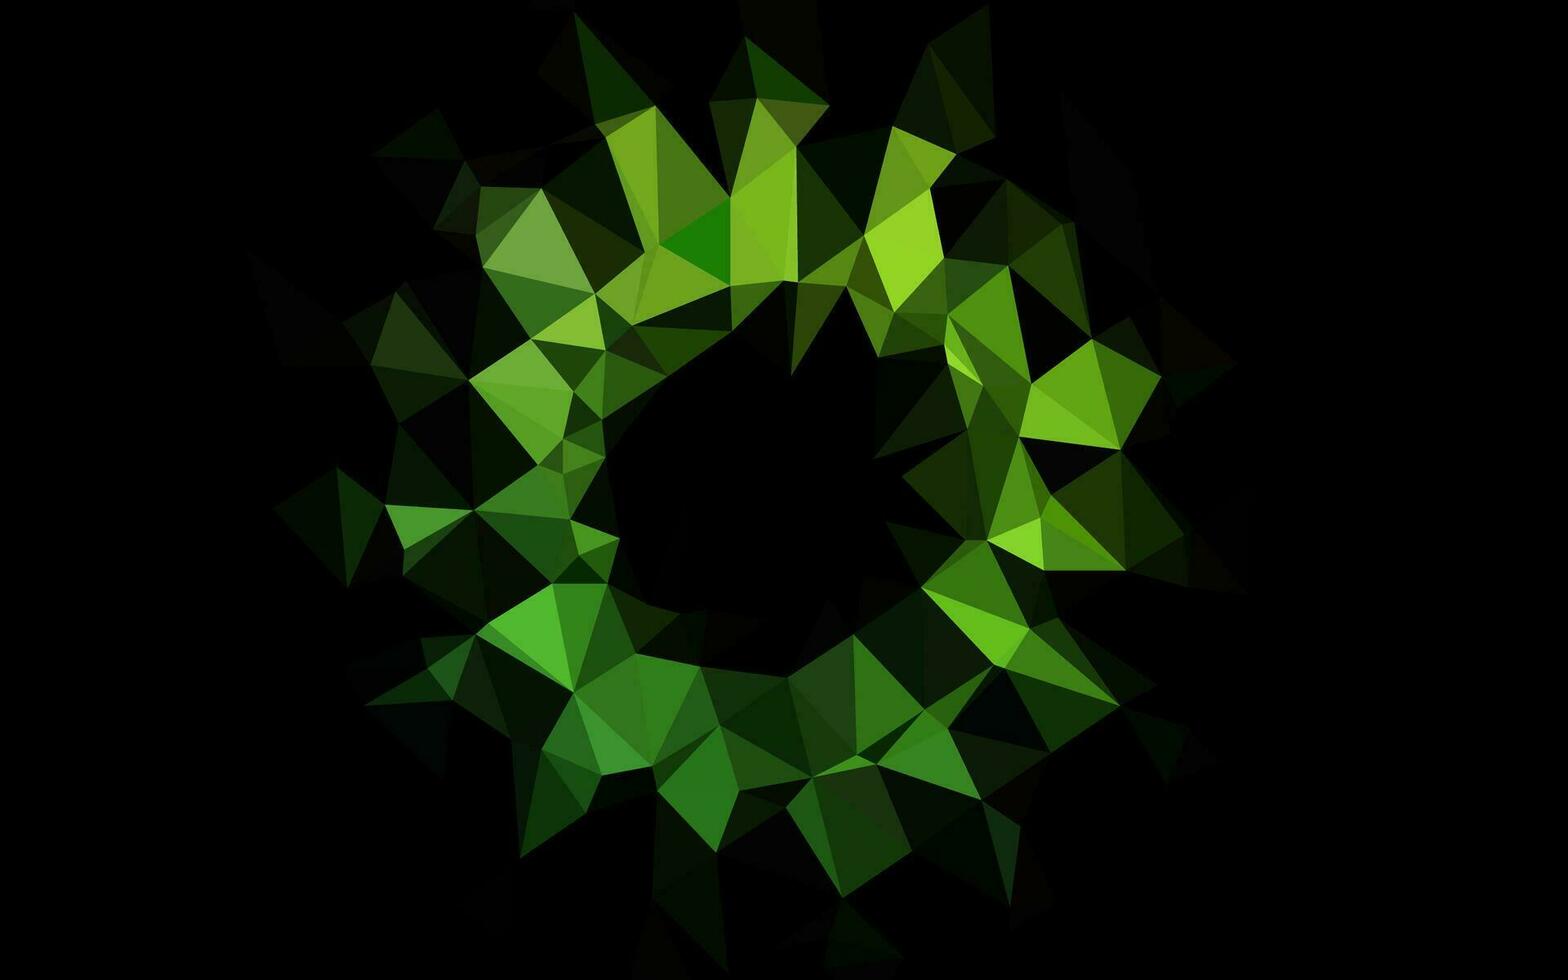 cubierta de poli baja vector verde claro.